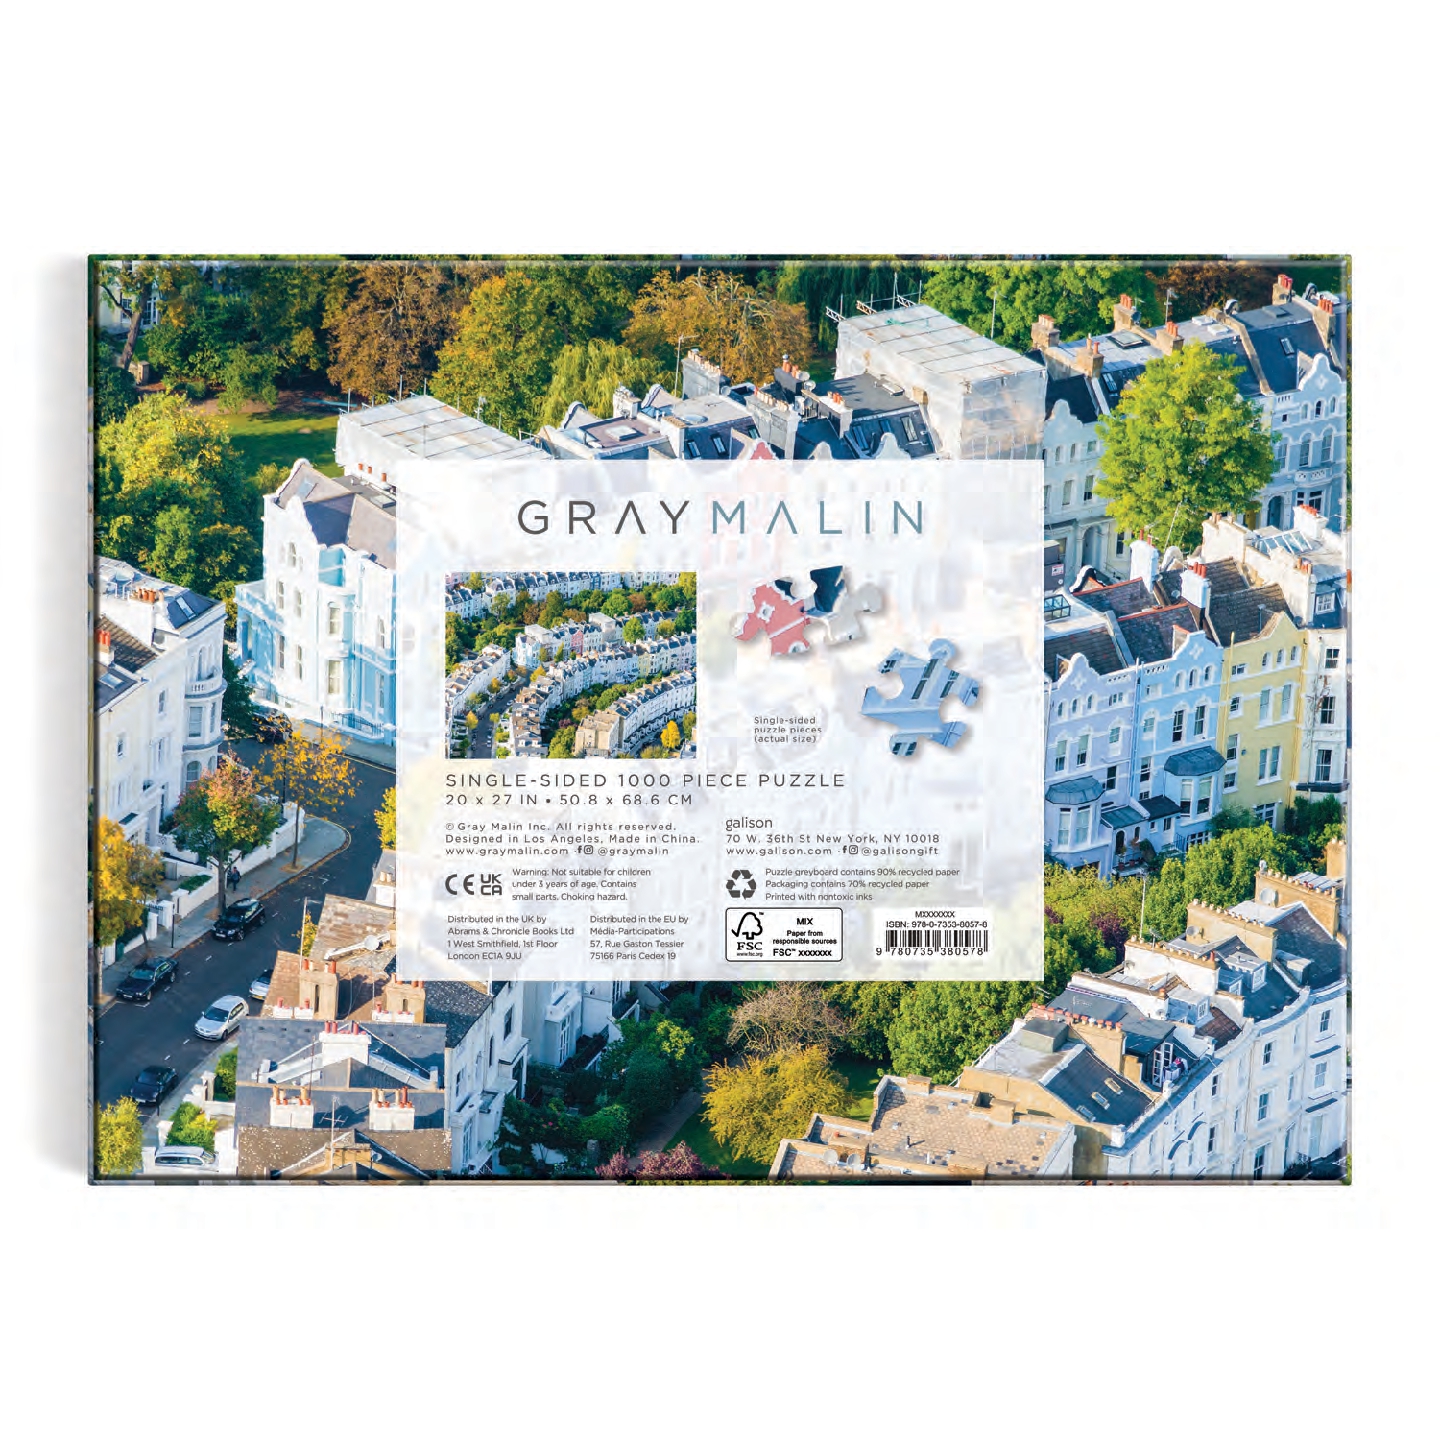 Gray Malin 1000 piece Puzzle Notting Hill